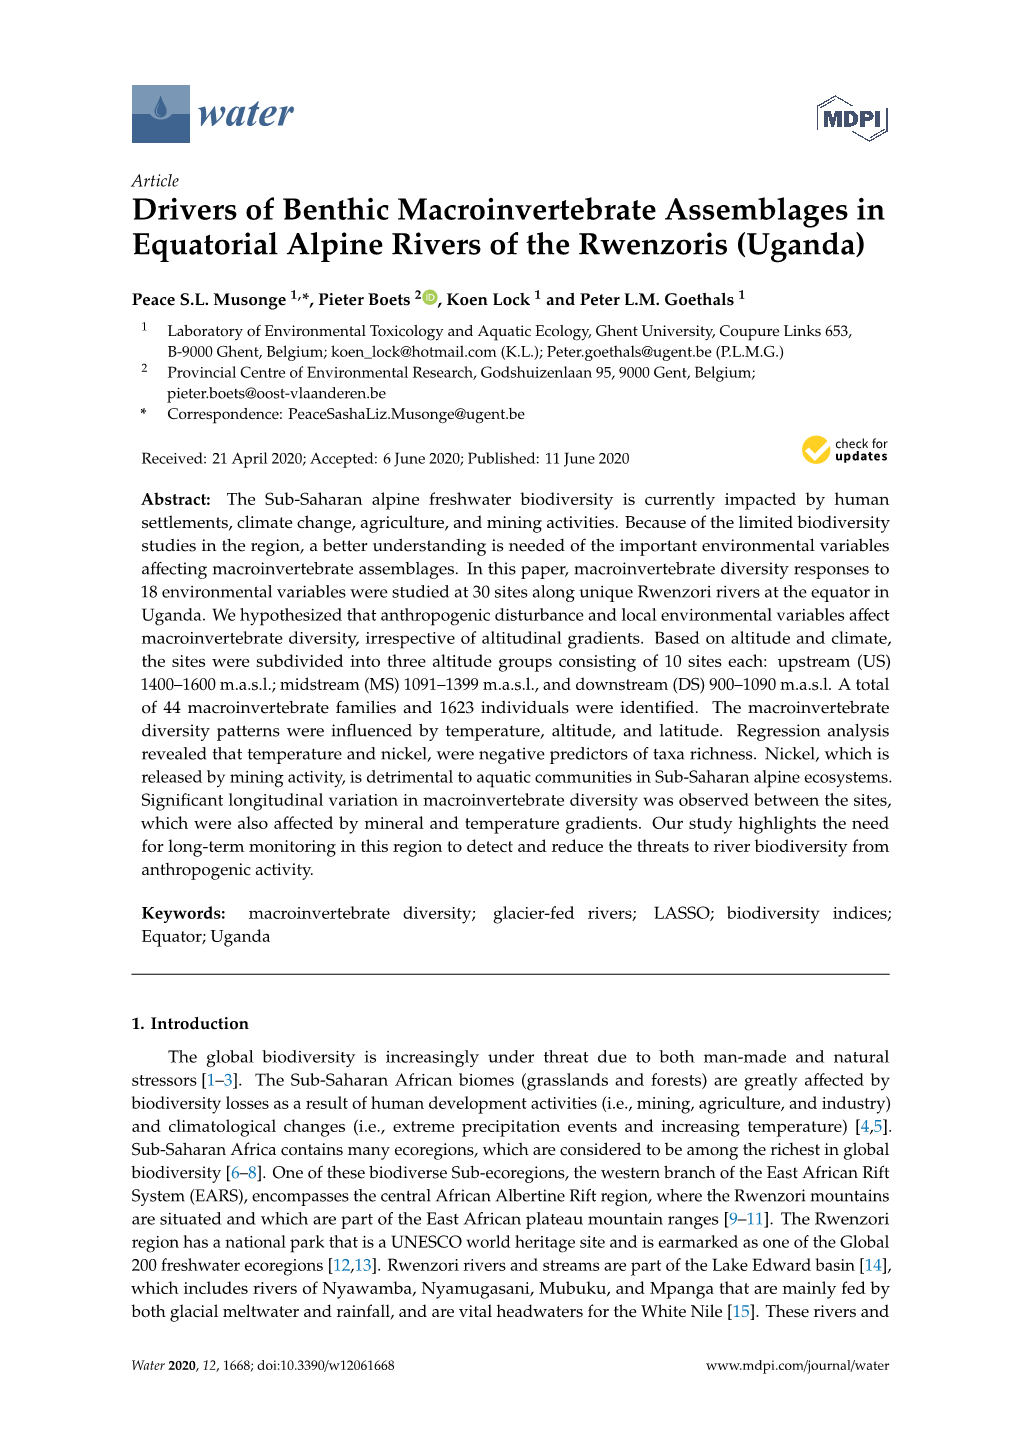 Drivers of Benthic Macroinvertebrate Assemblages in Equatorial Alpine Rivers of the Rwenzoris (Uganda)